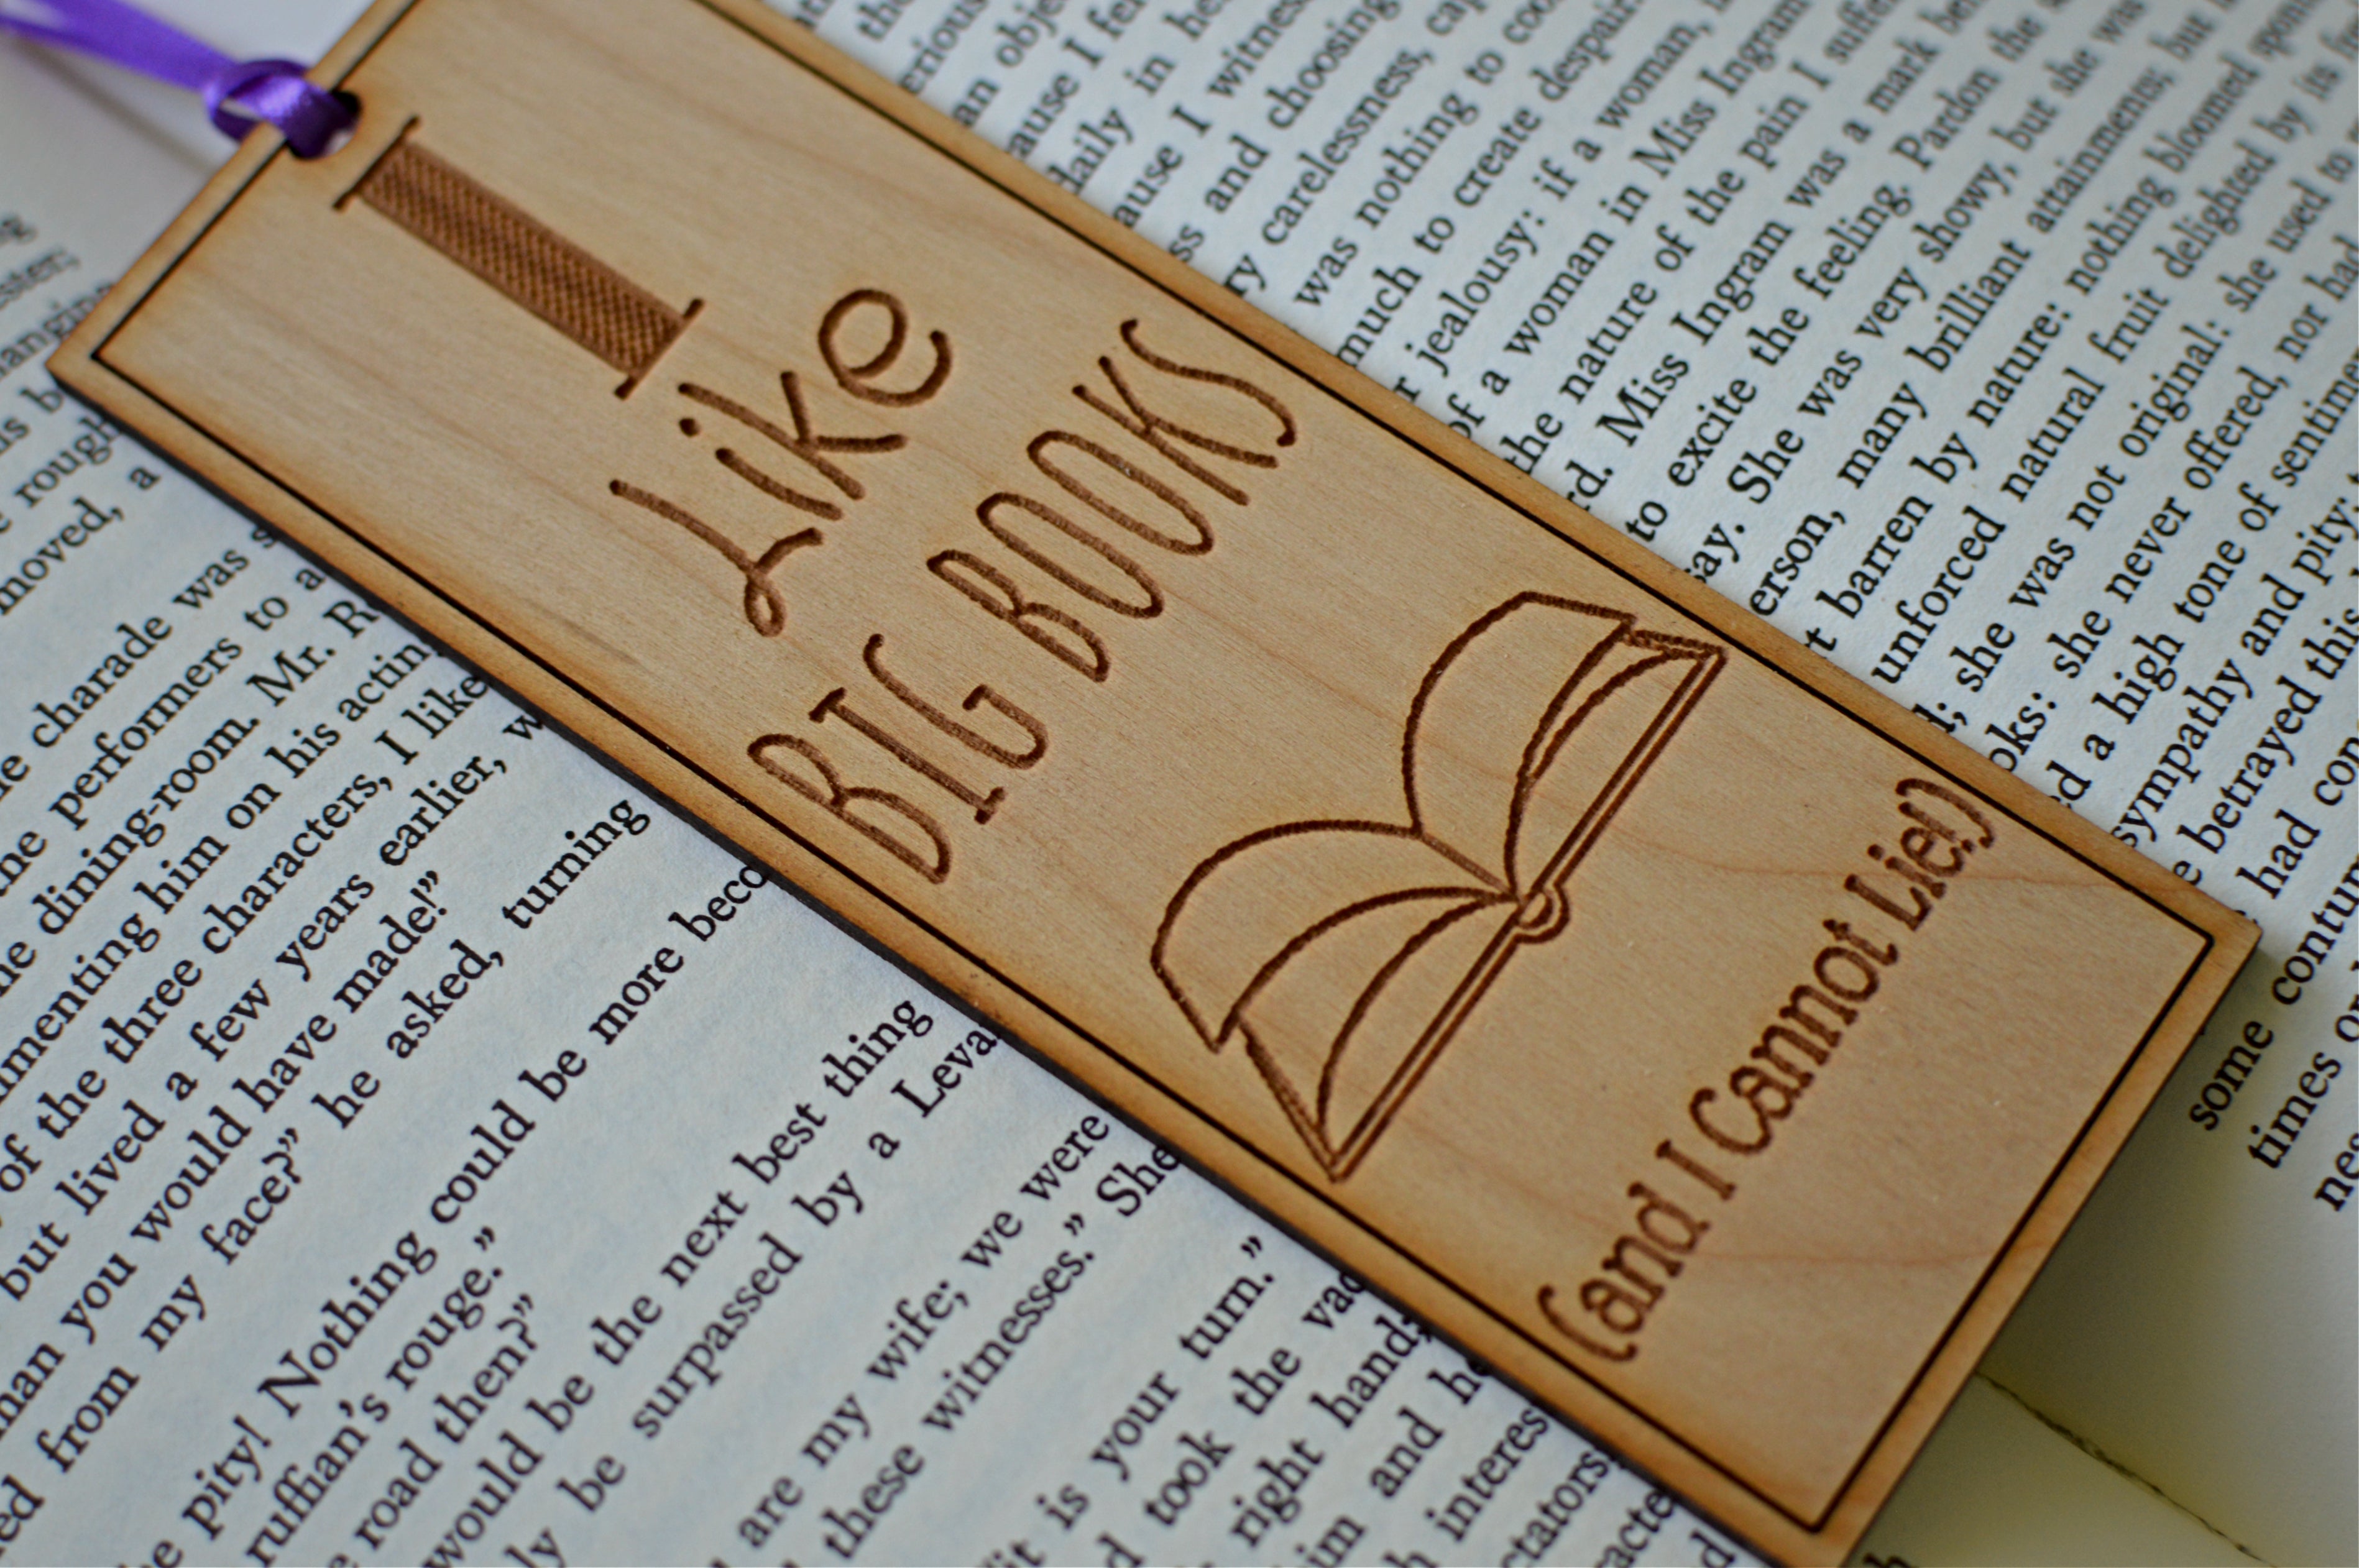 I Like Big Books - Wood Bookmark